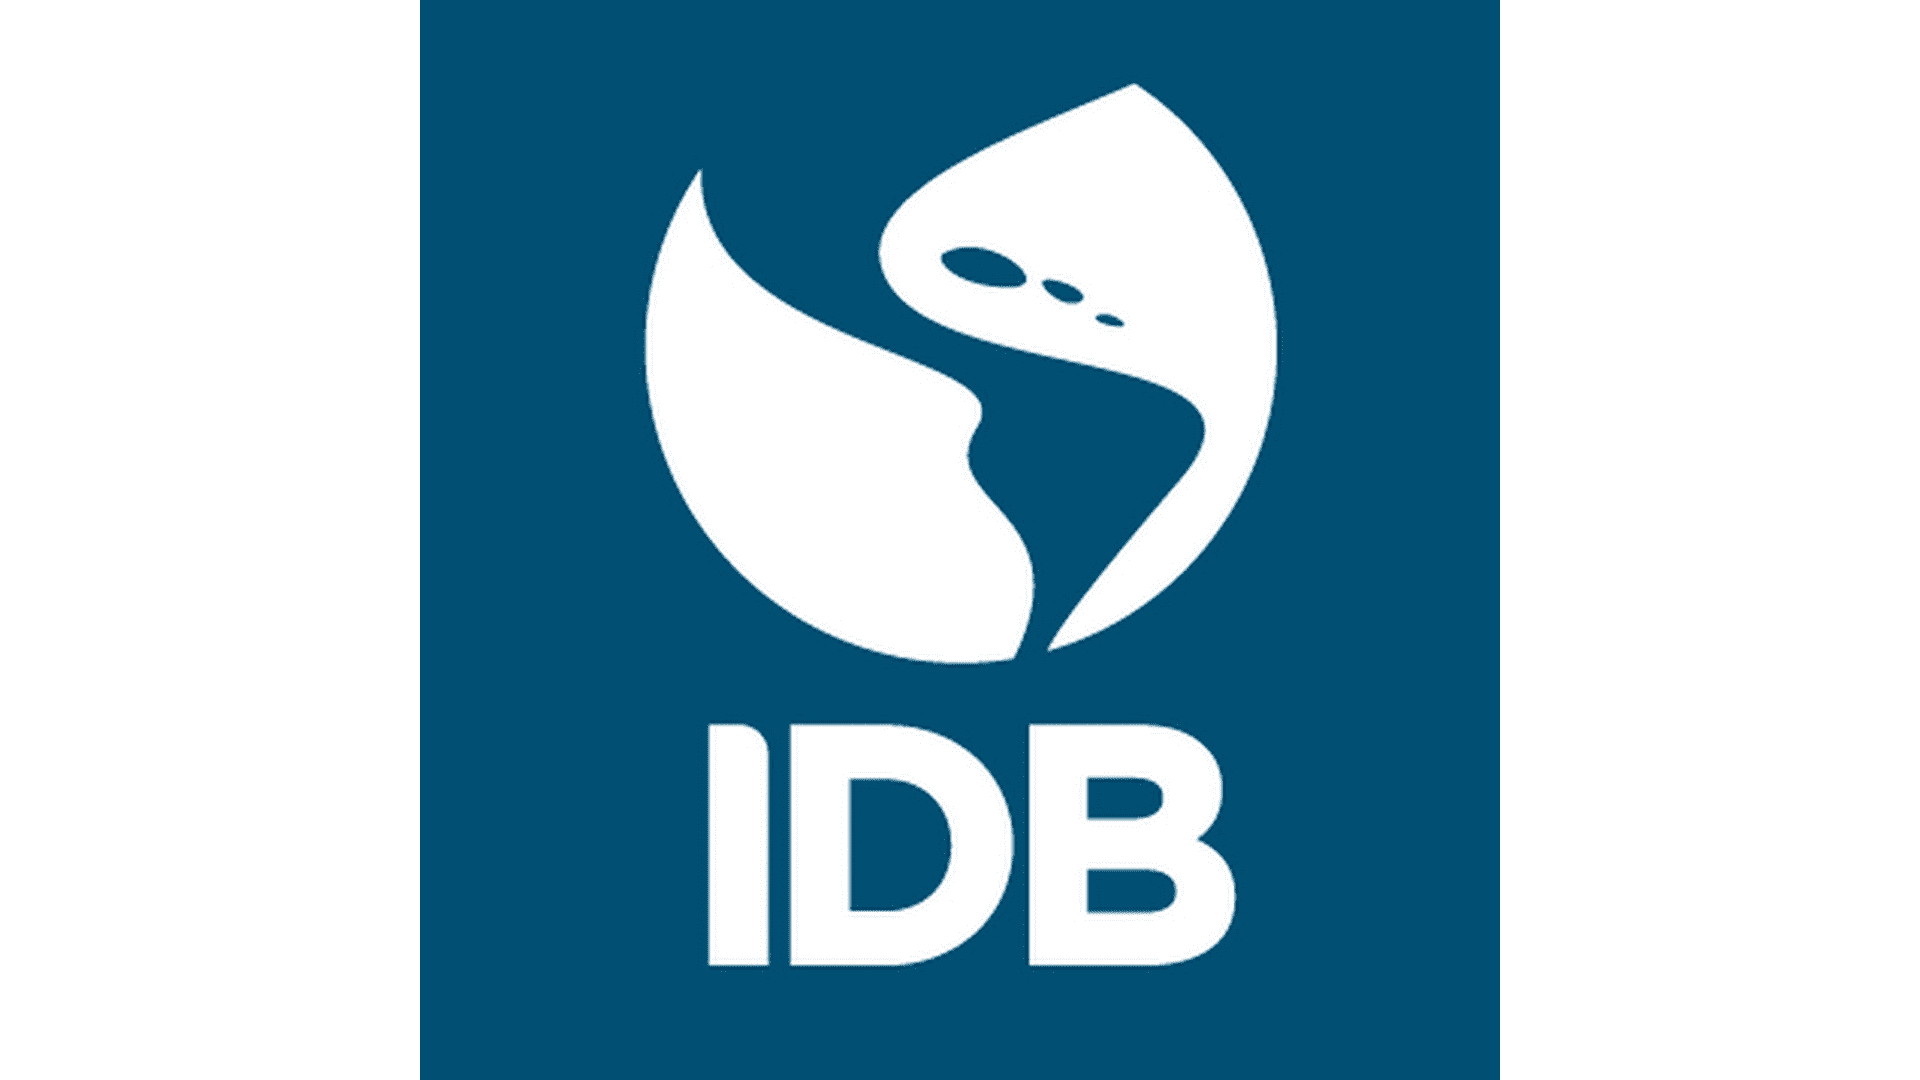 Inter-American Development Bank's logo